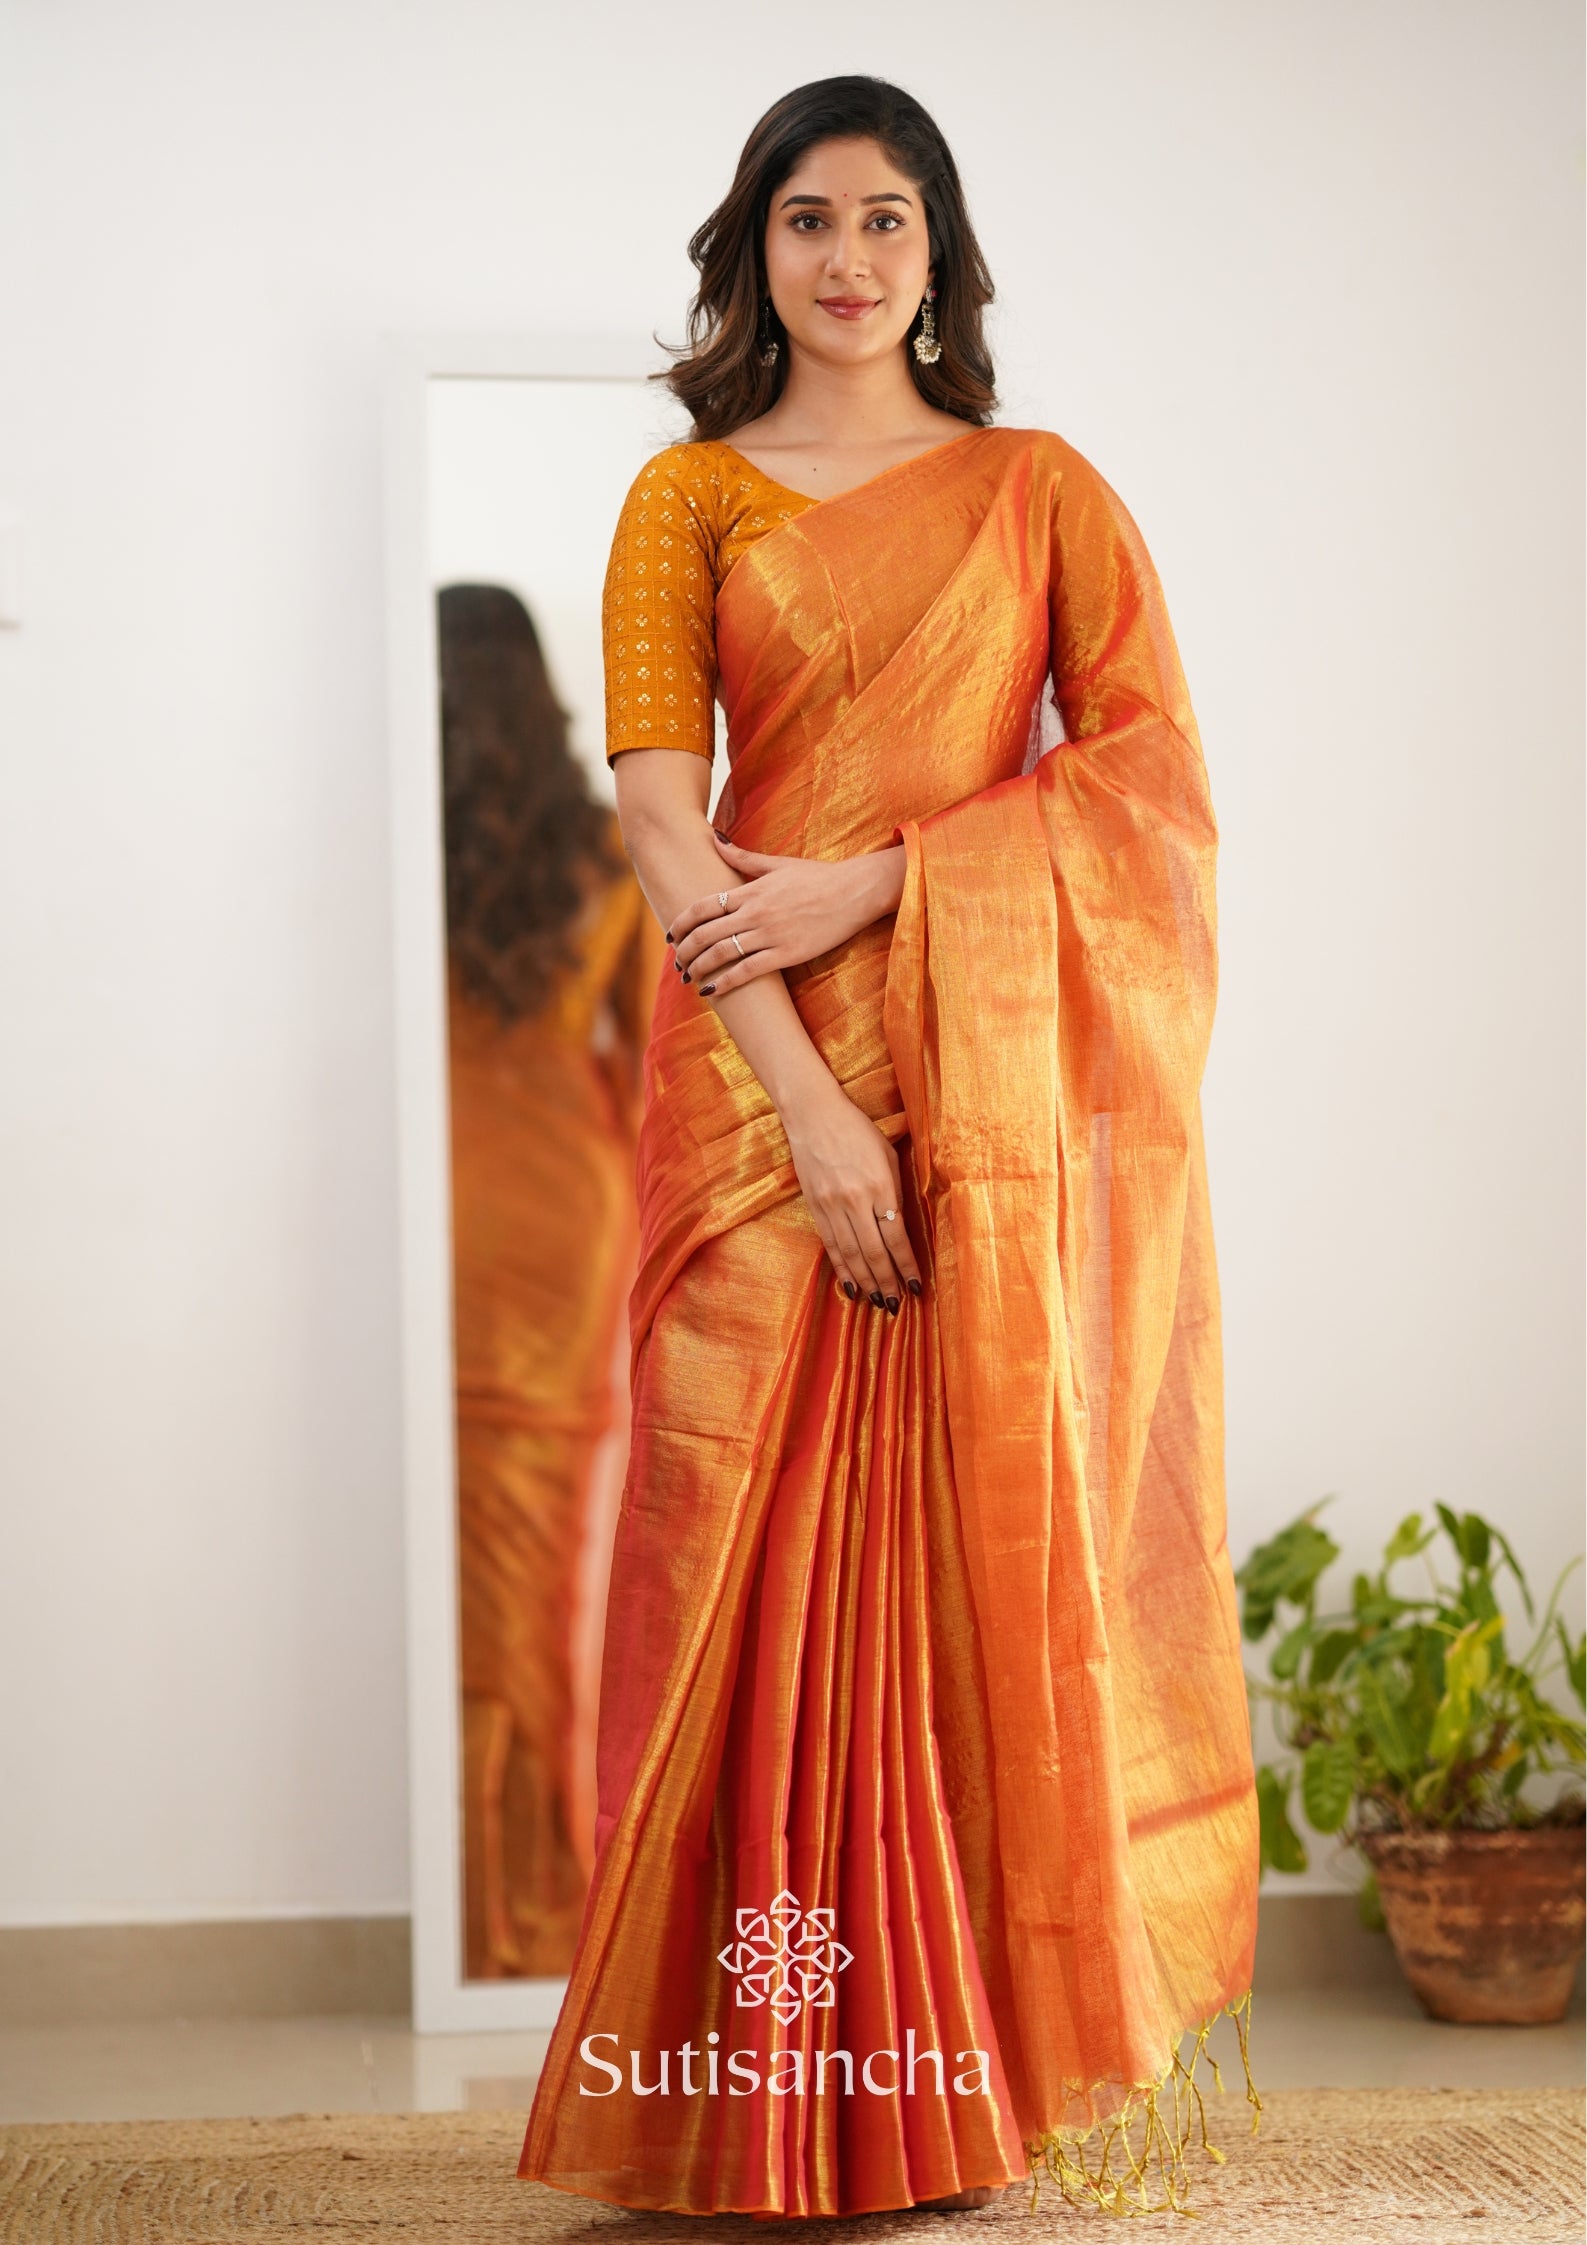 Sutisancha Orange Handloom Tissue Saree With Designer Blouse